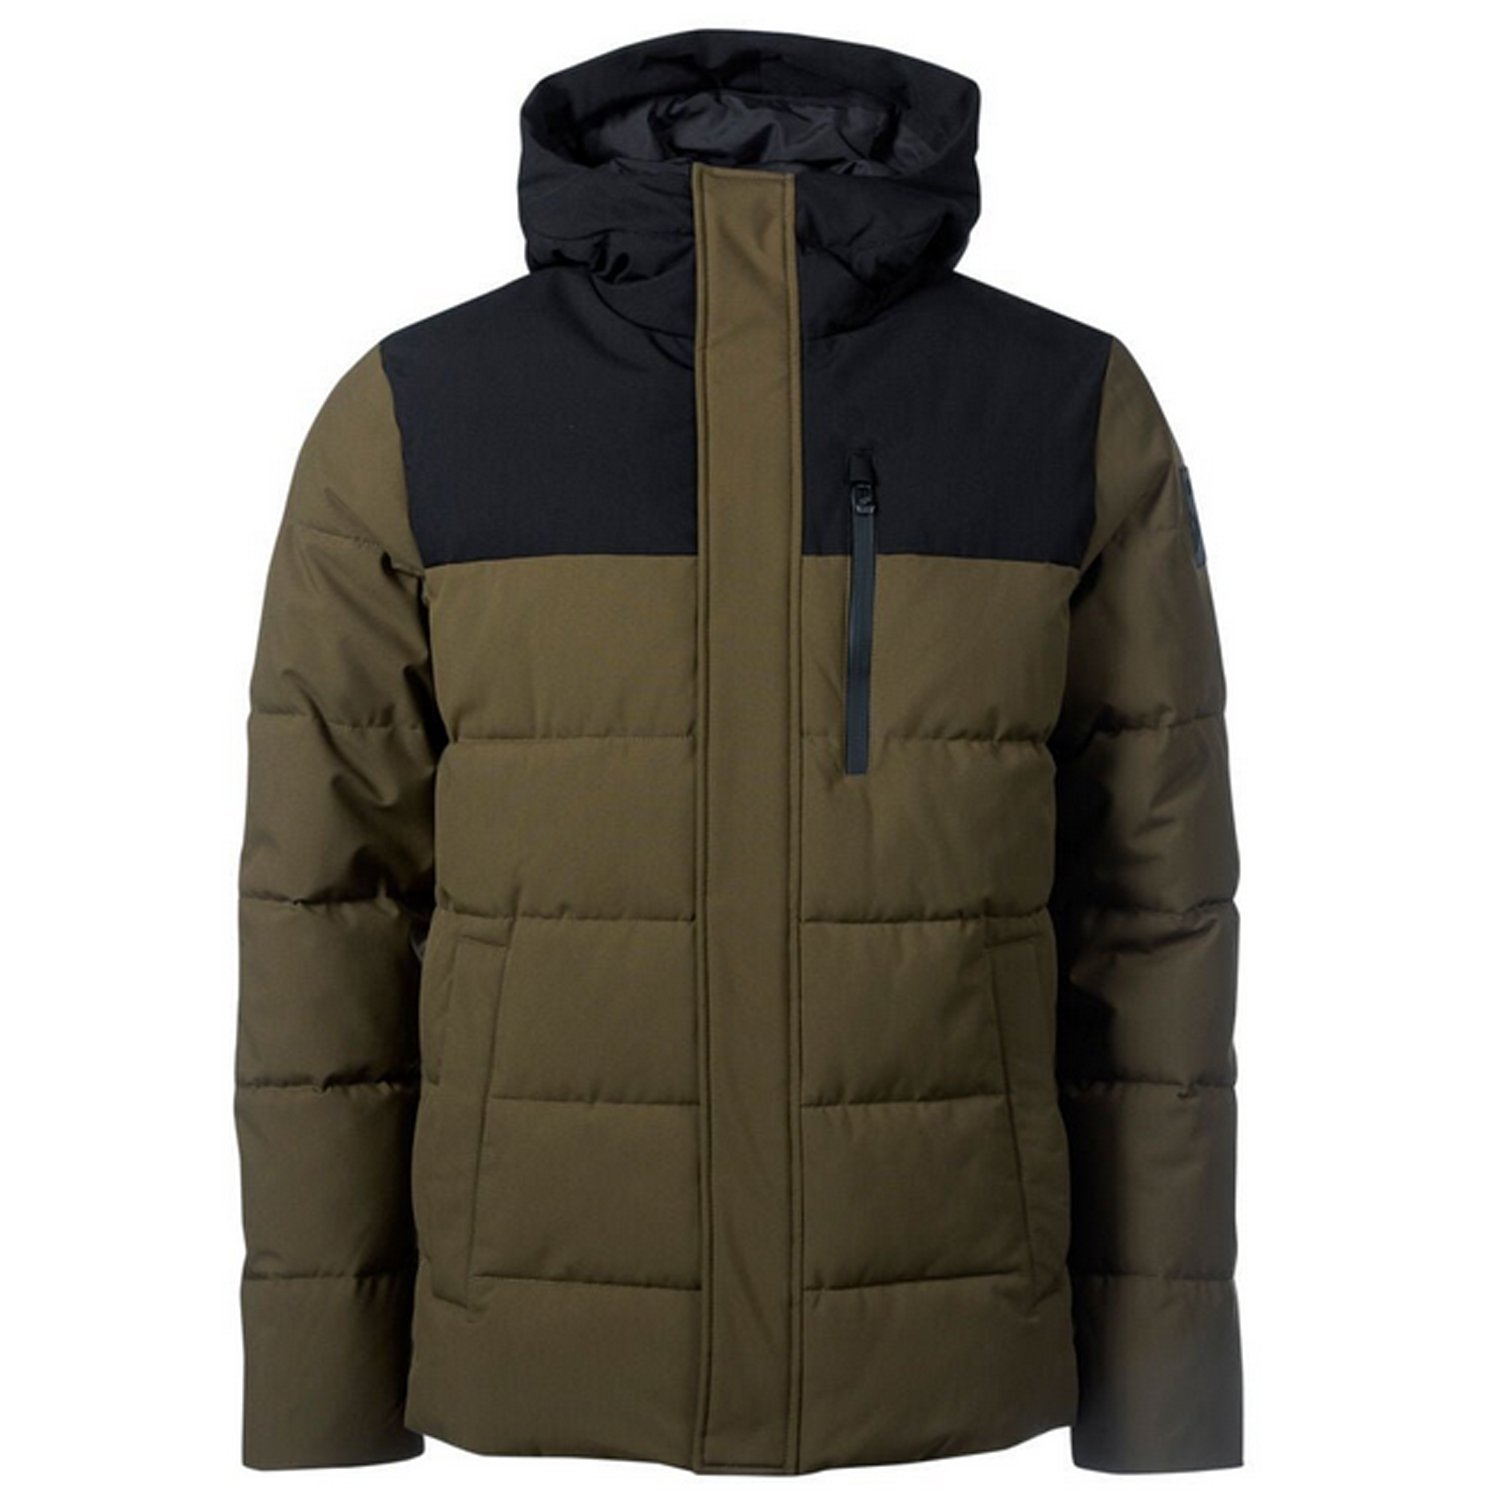 Куртка мужская Halti Haaga, dark olive, EH065-0390-U57 куртка утепленная мужская kappa синий